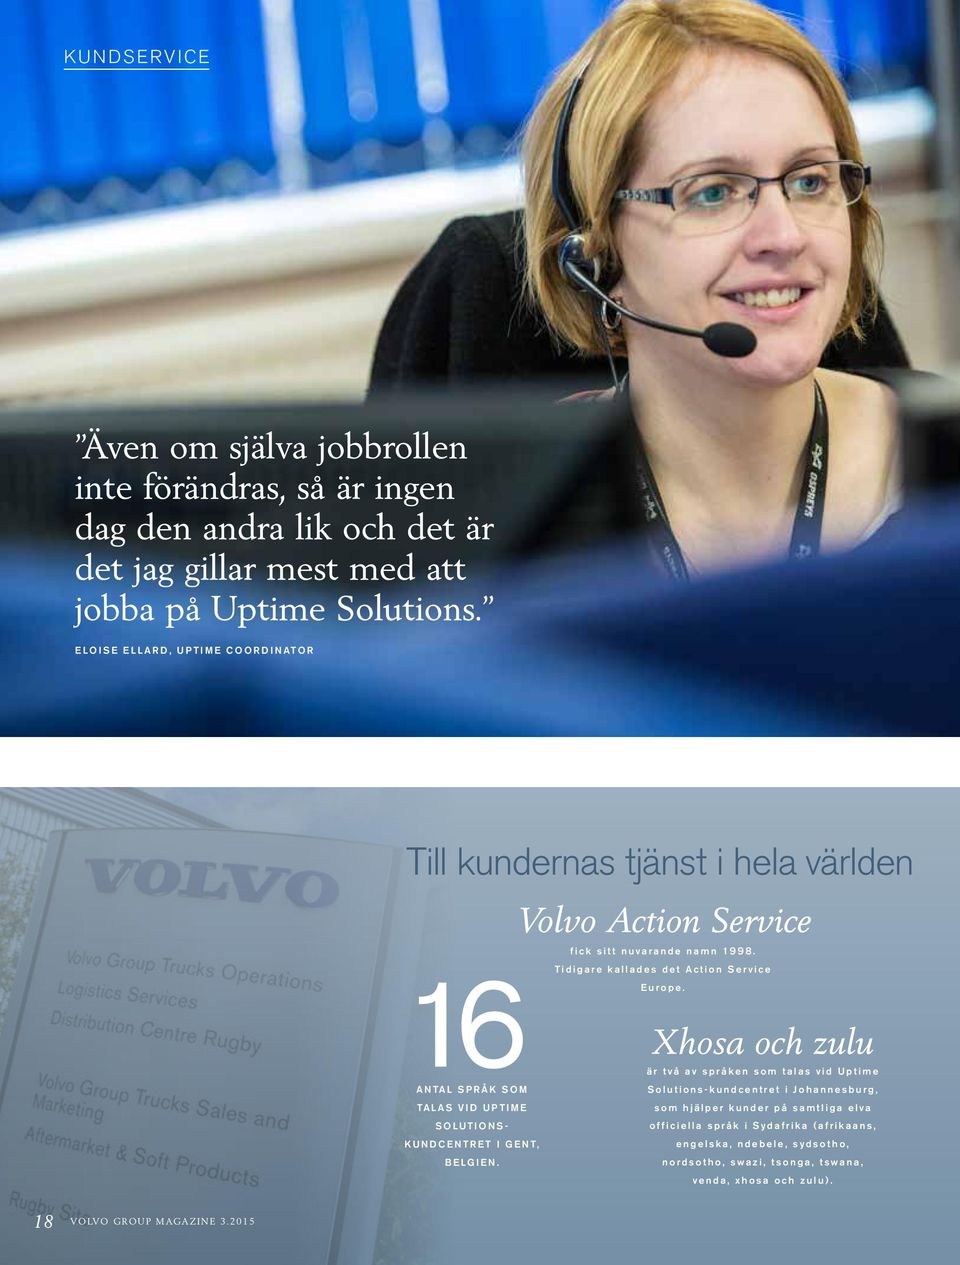 BELGIEN. Volvo Action Service fick sitt nuvarande namn 1998. Tidigare kallades det Action Service Europe.